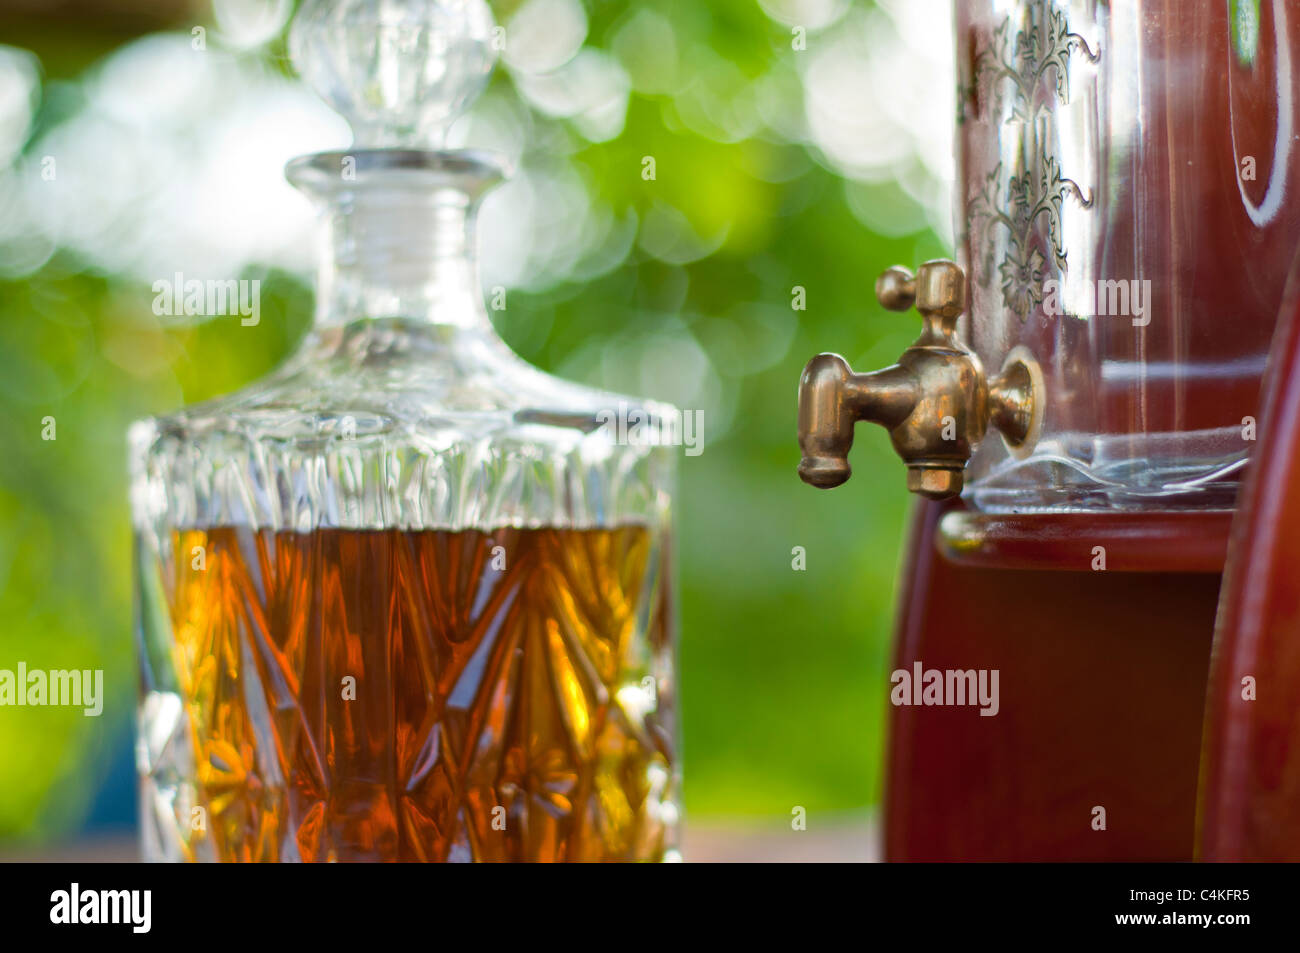 Decorative bottle with whisky Stock Photo